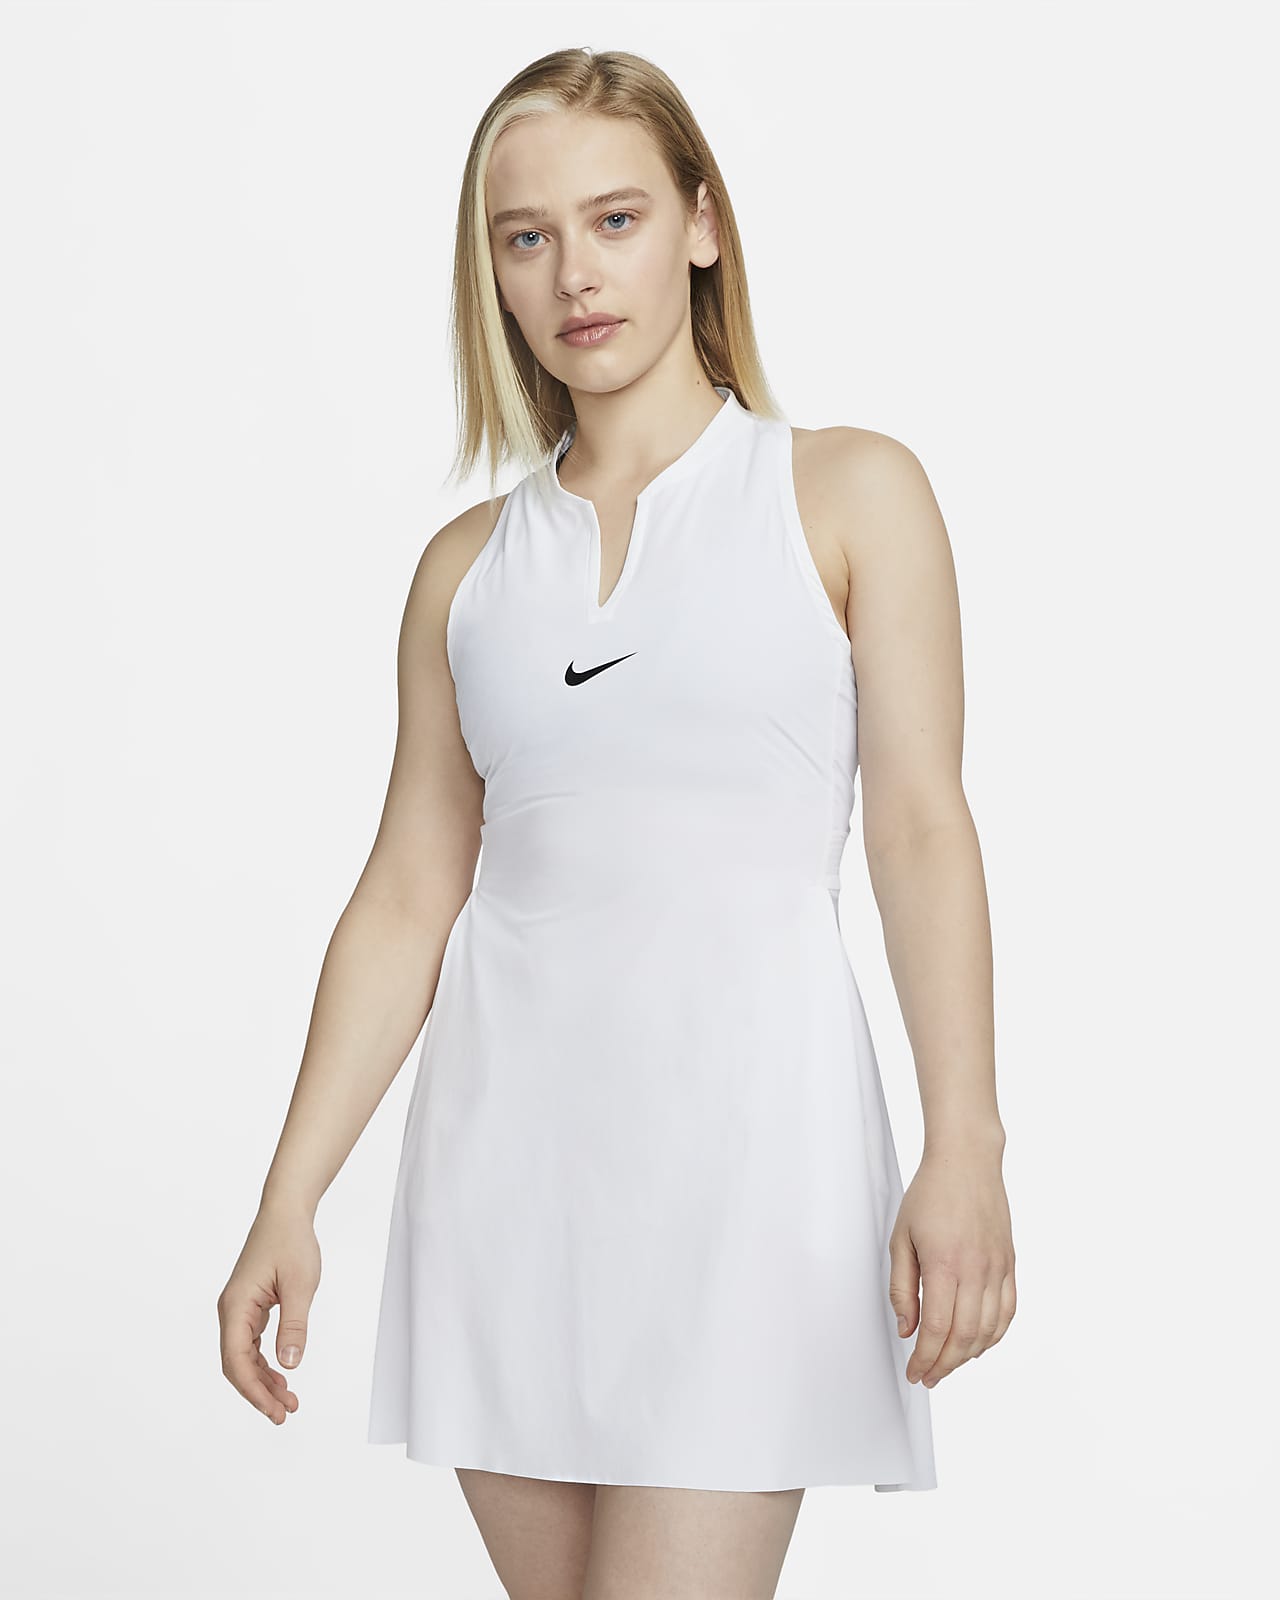 Nike Court Dri Fit Advantage Pant - Black/White